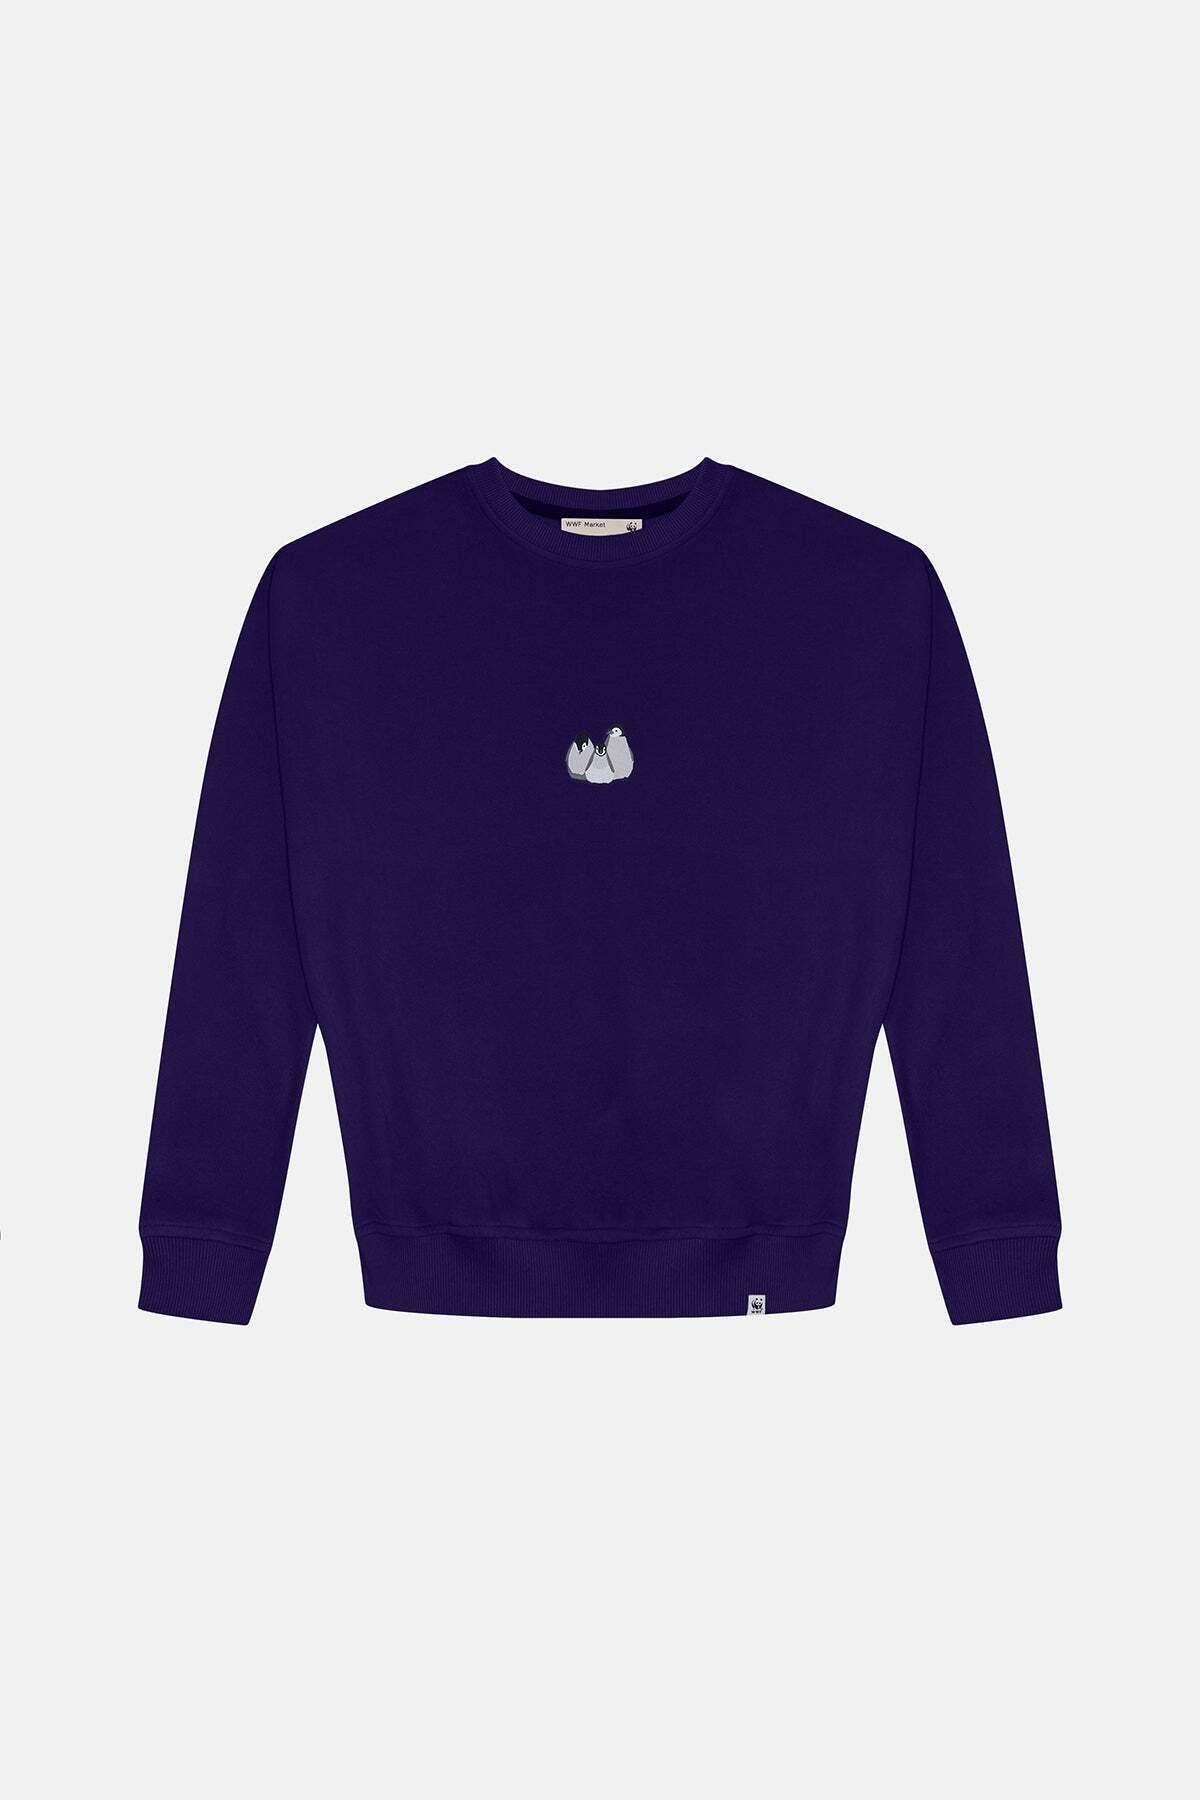 WWF Market Yavru İmparator Penguen Super Soft Oversize Sweatshirt - Mor